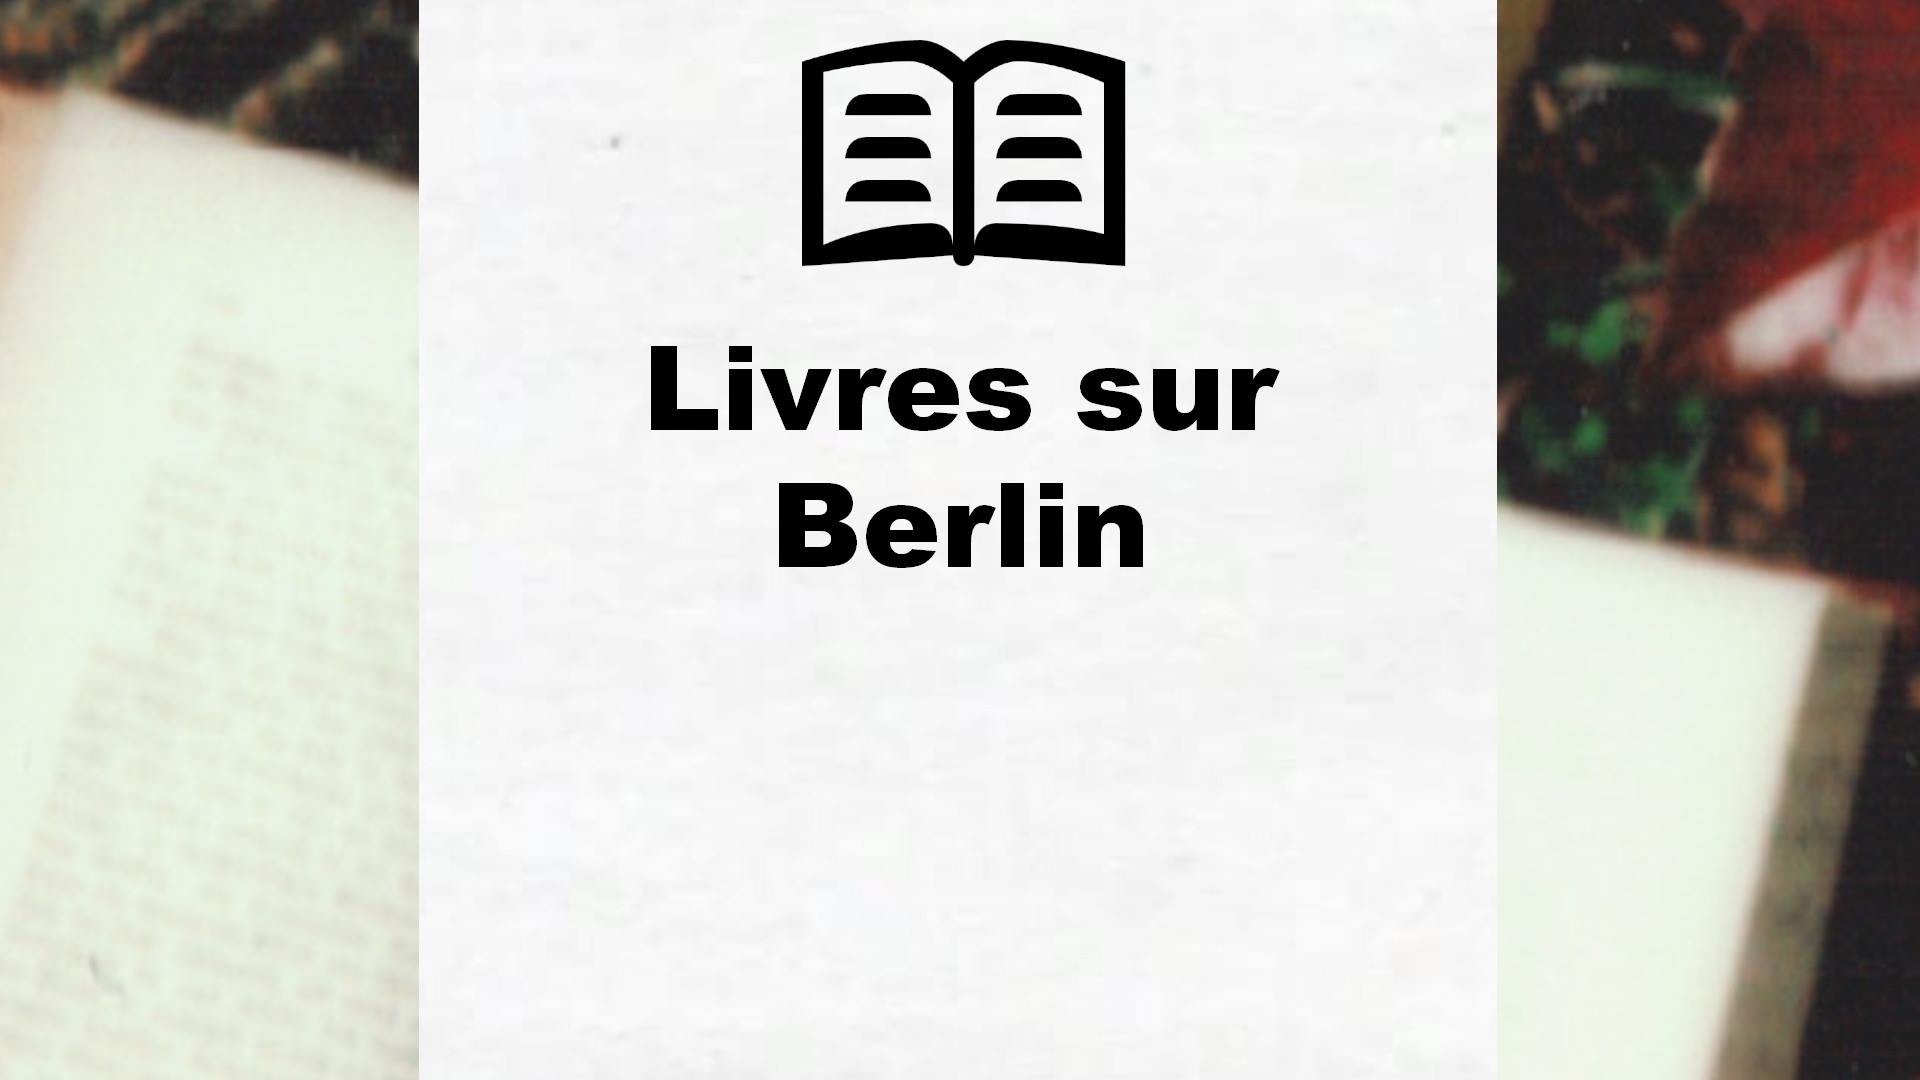 Livres sur Berlin